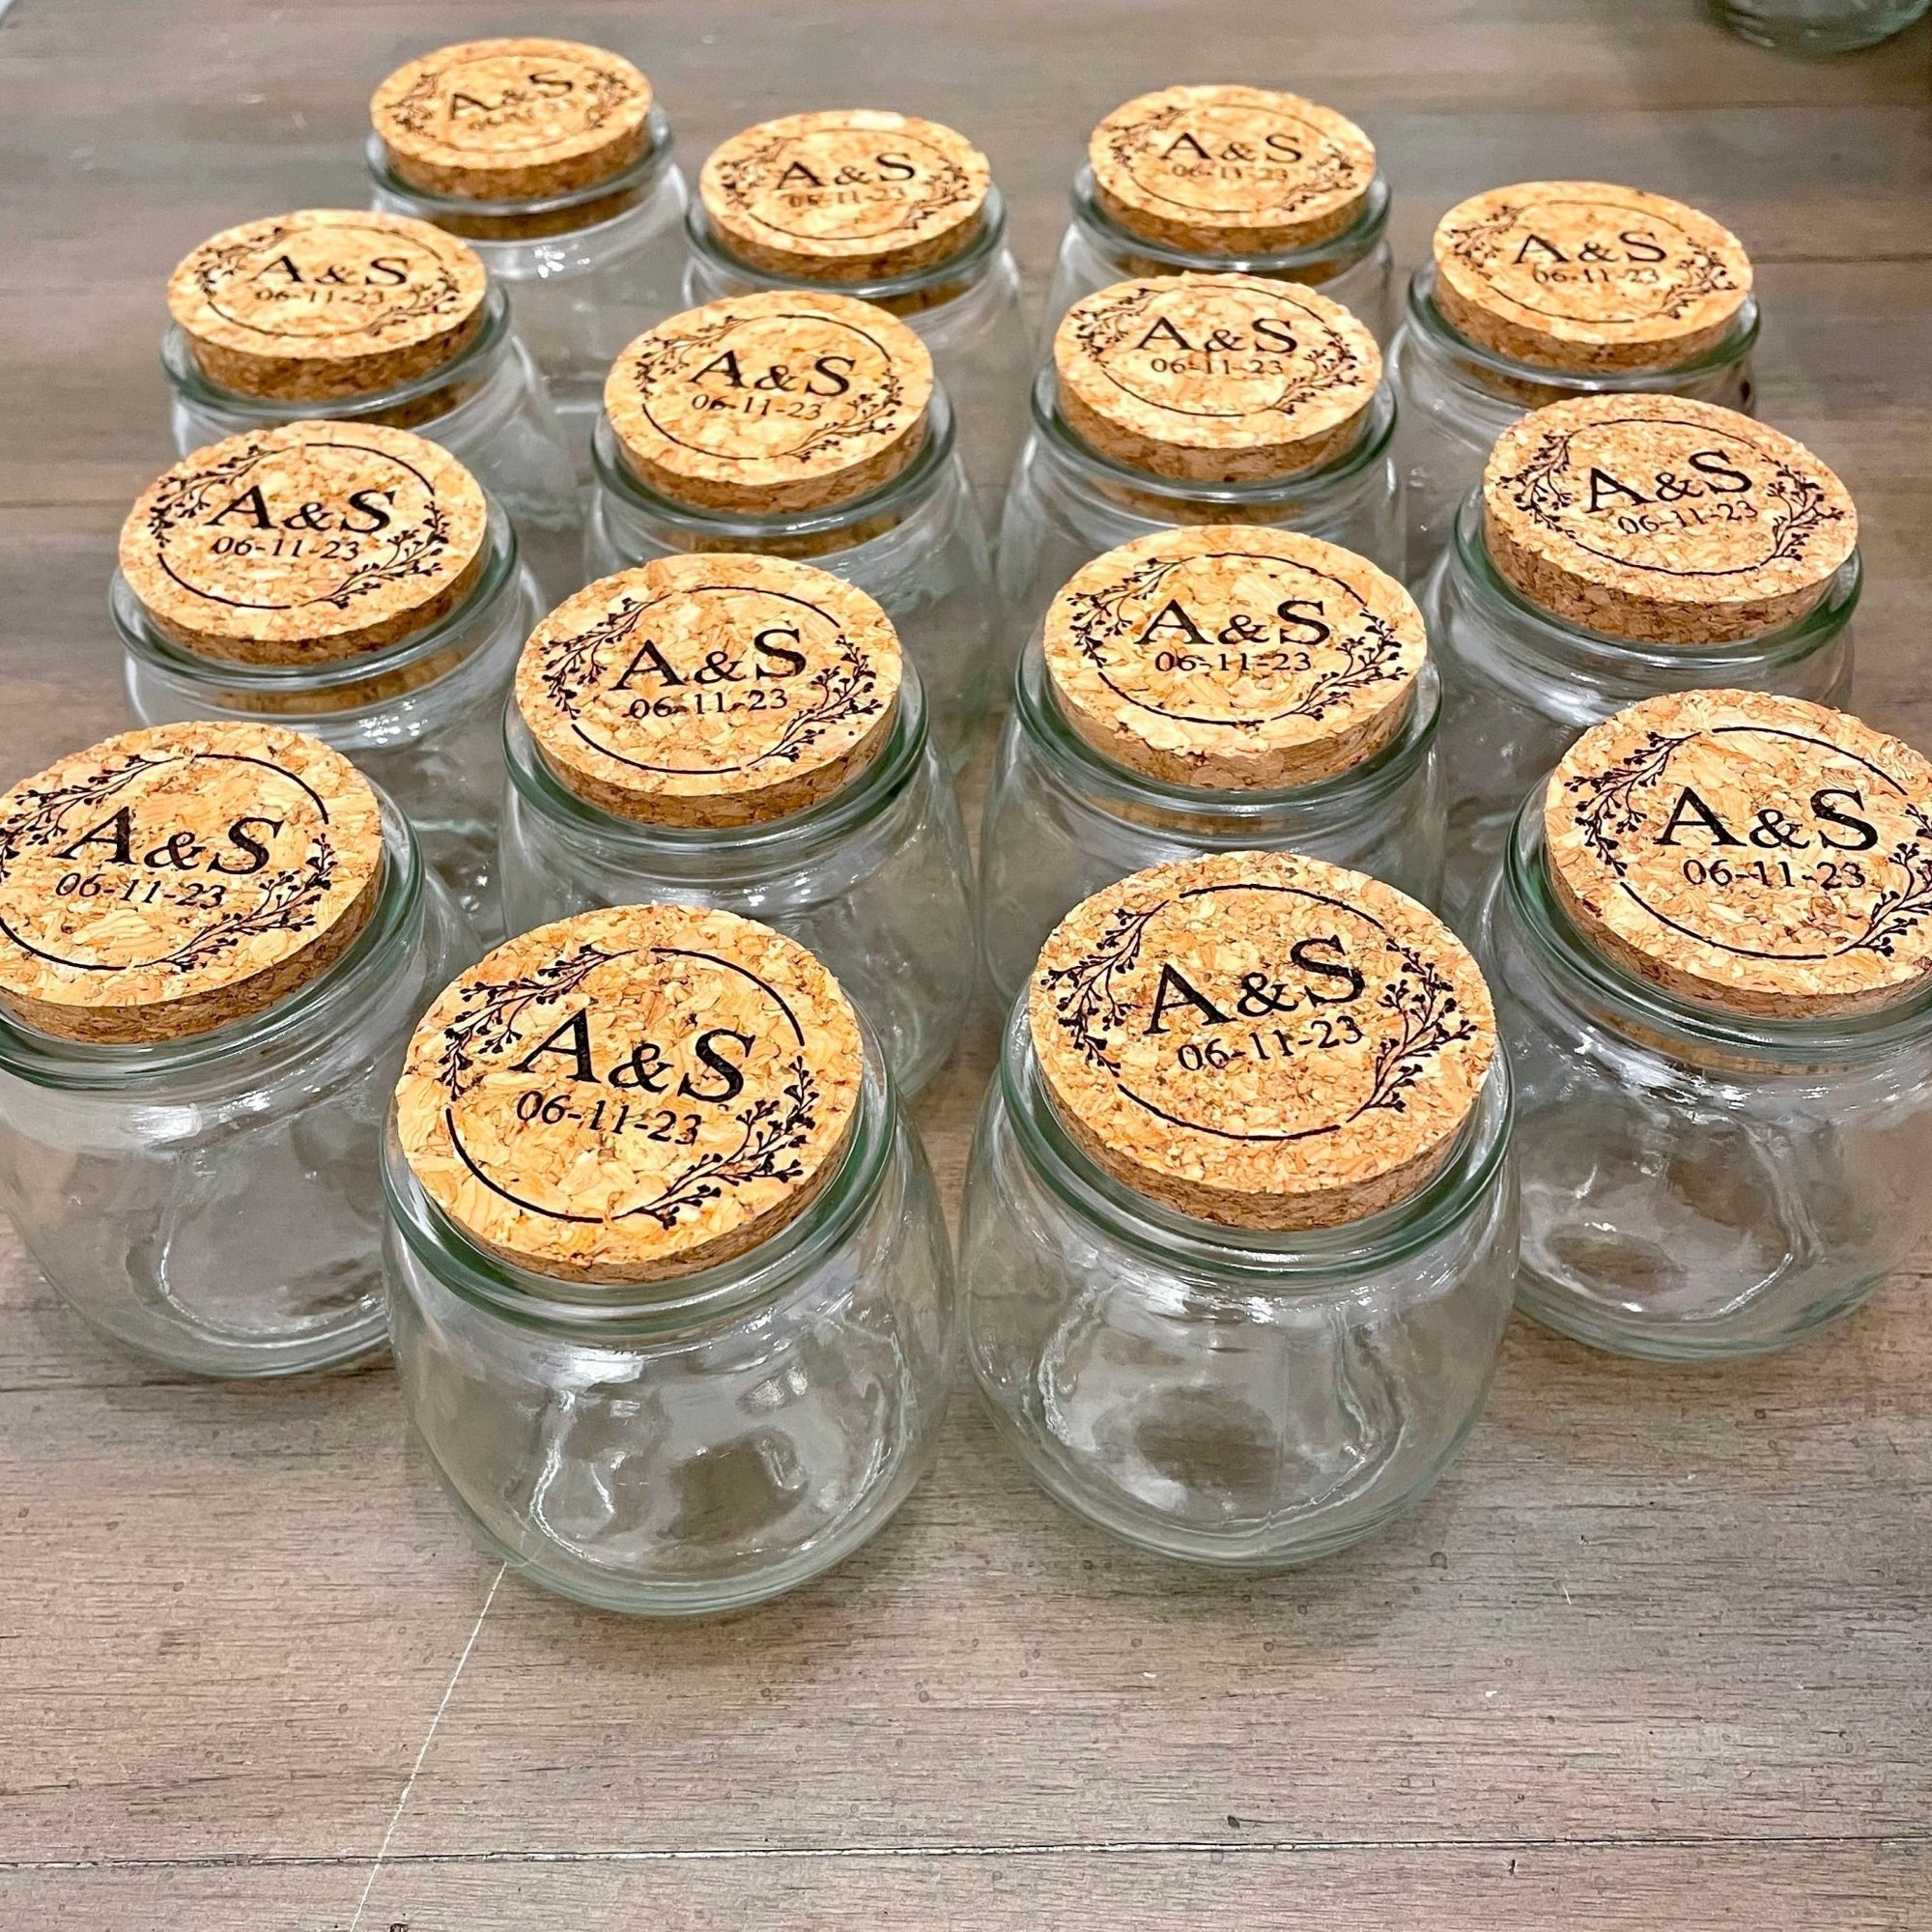 Mini Jam Jar, Small Glass Jar with Airtight Lids for Wedding Favours